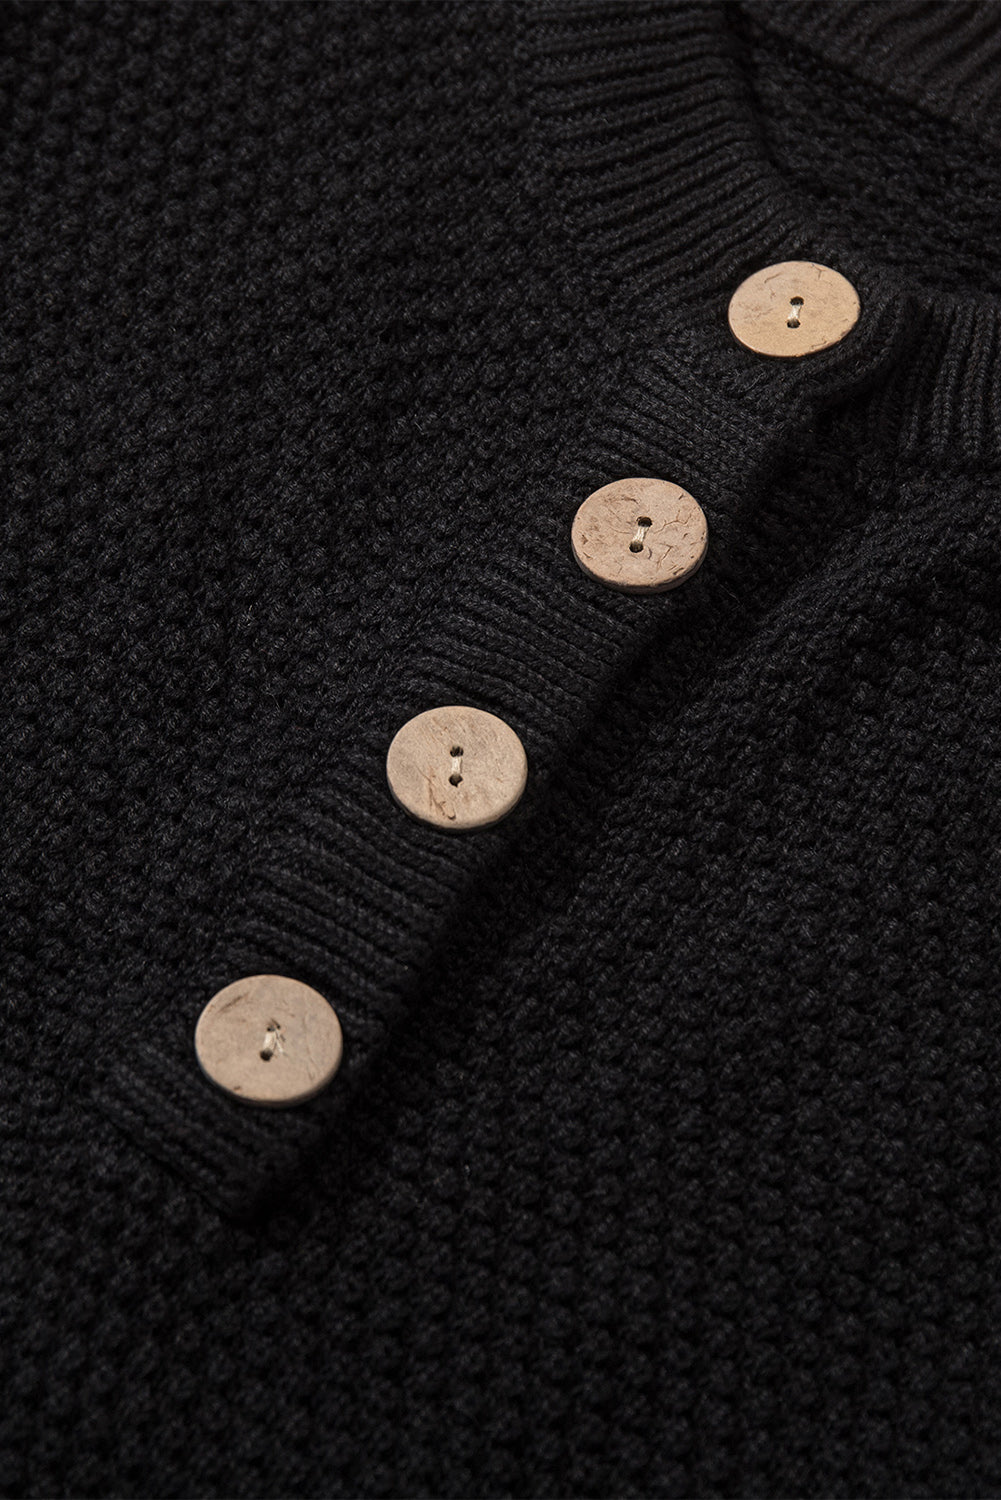 Women's Black Henley Pullover Drop Shoulder Sweater with Slits